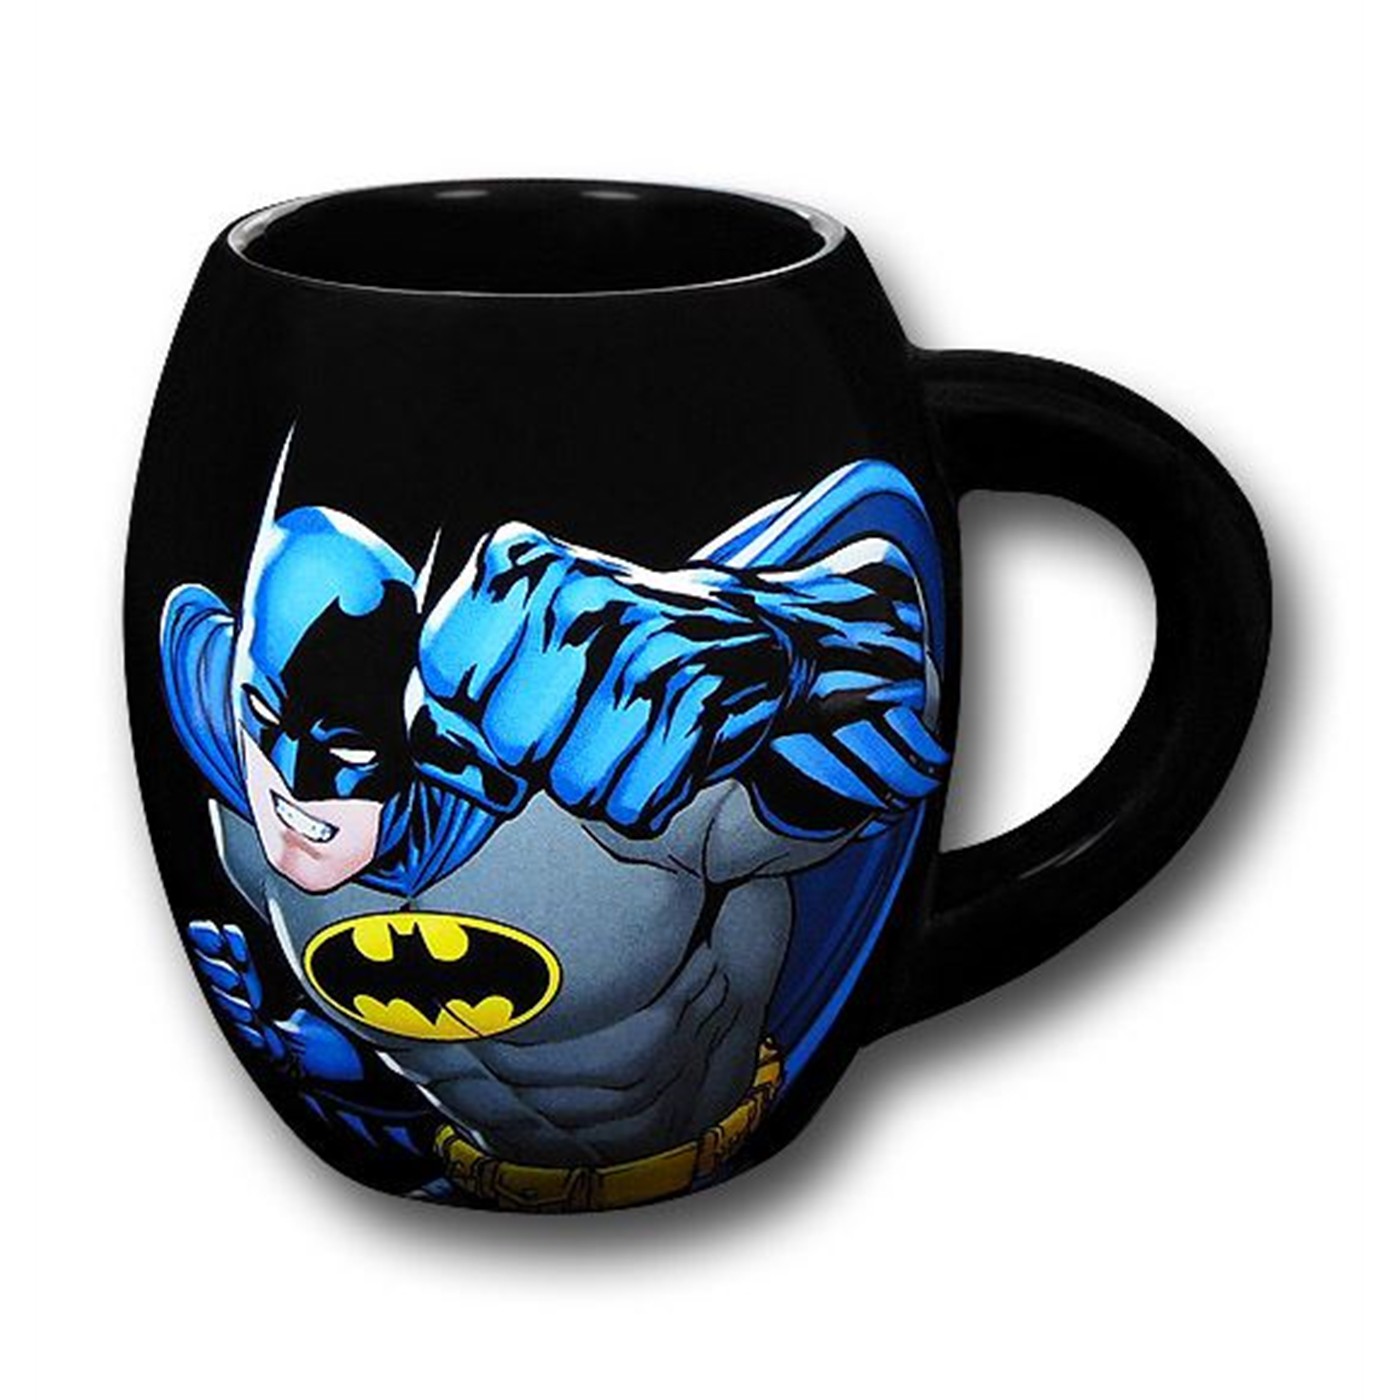 Batman Image and Symbol Ceramic Barrel Mug